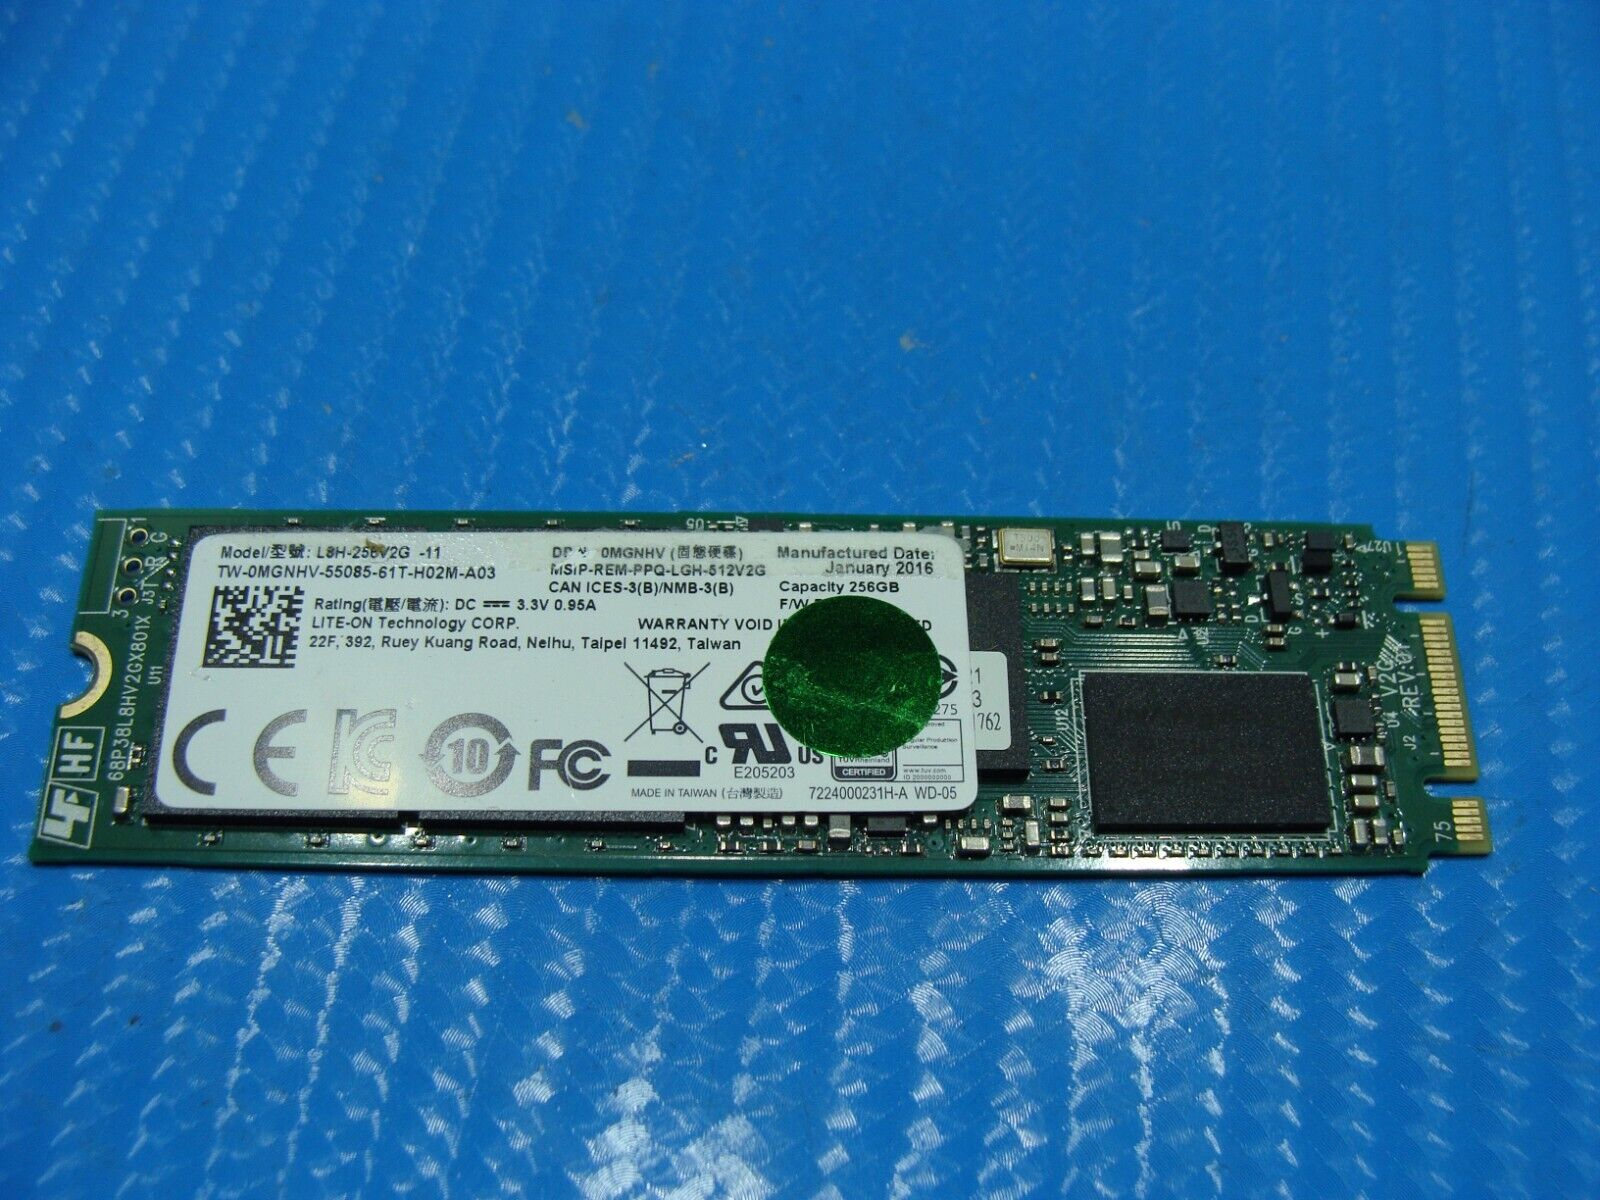 Dell E5470 Lite-On 256GB M.2 SATA SSD Solid State Drive L8H-256V2G-11 MGNV